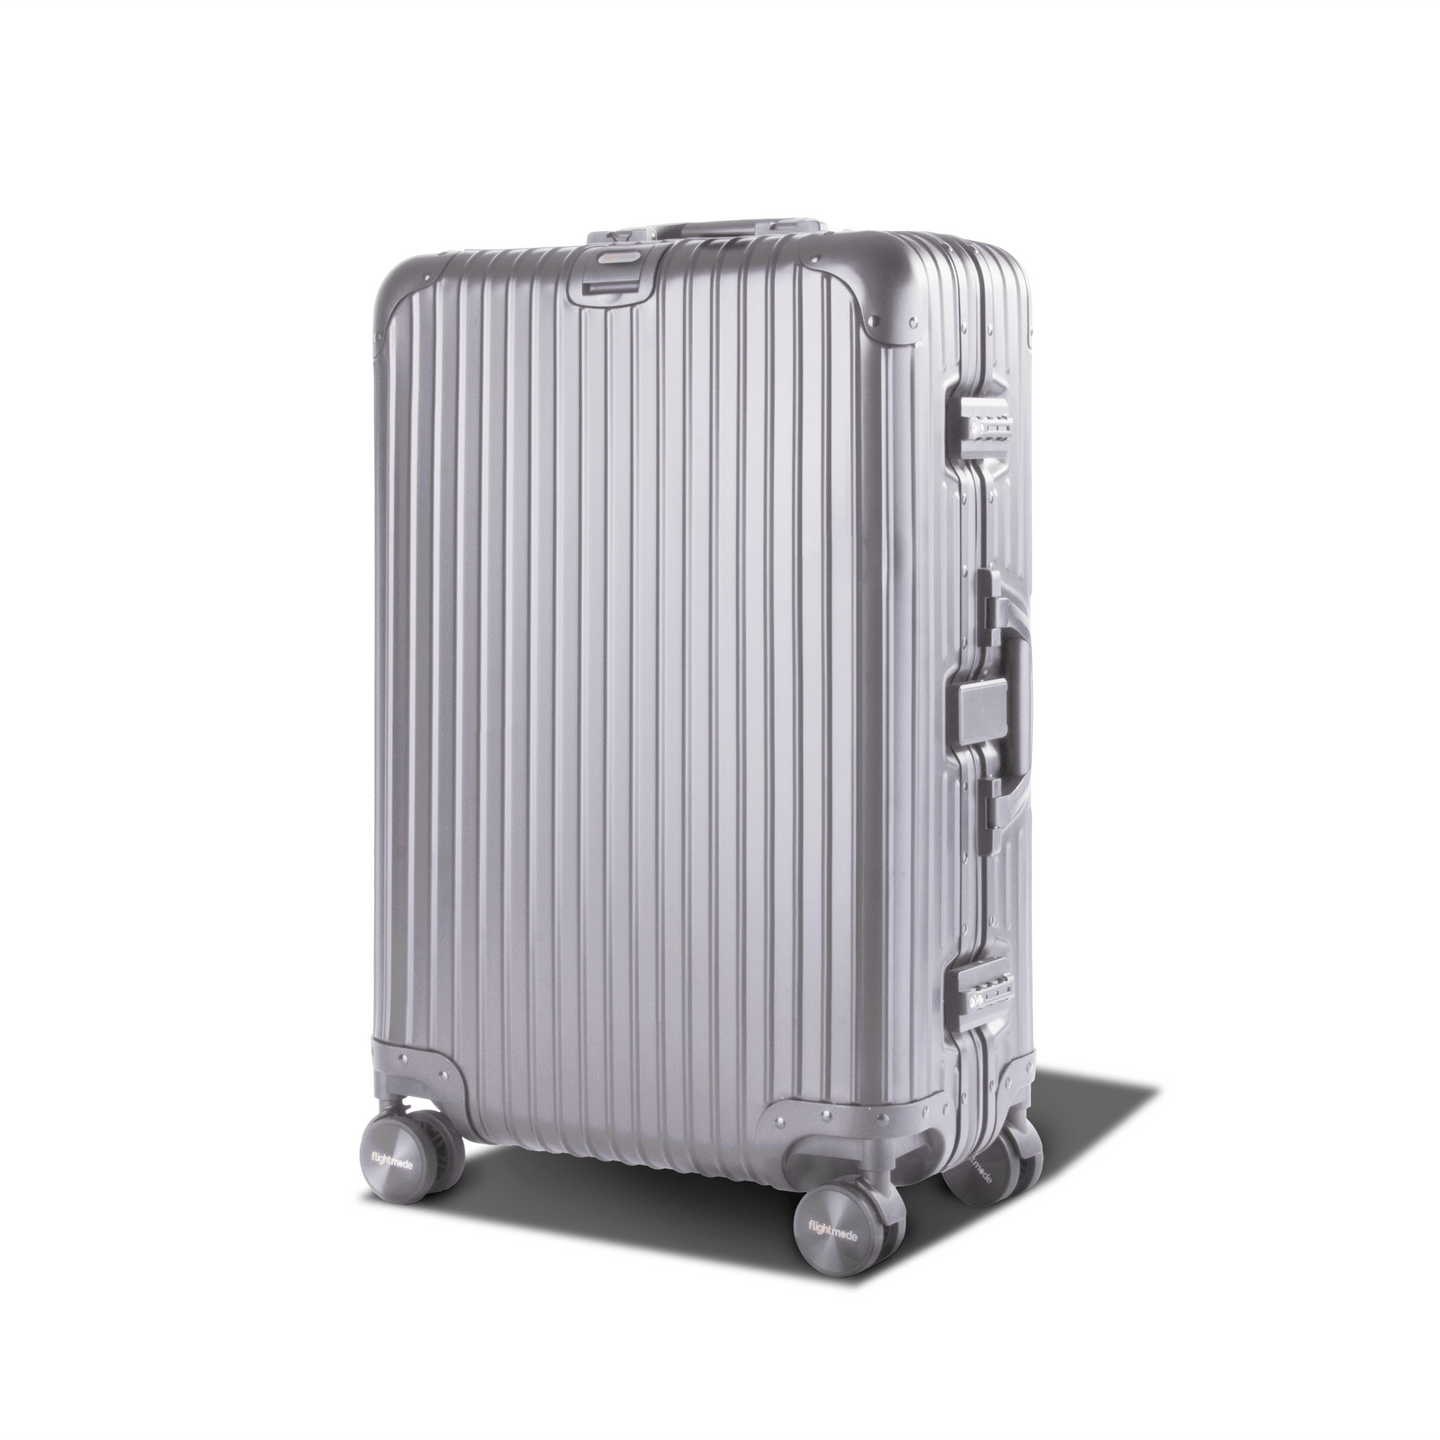 Flightmode Luggage & Bags Flightmode Travel Suitcase Large-Silver